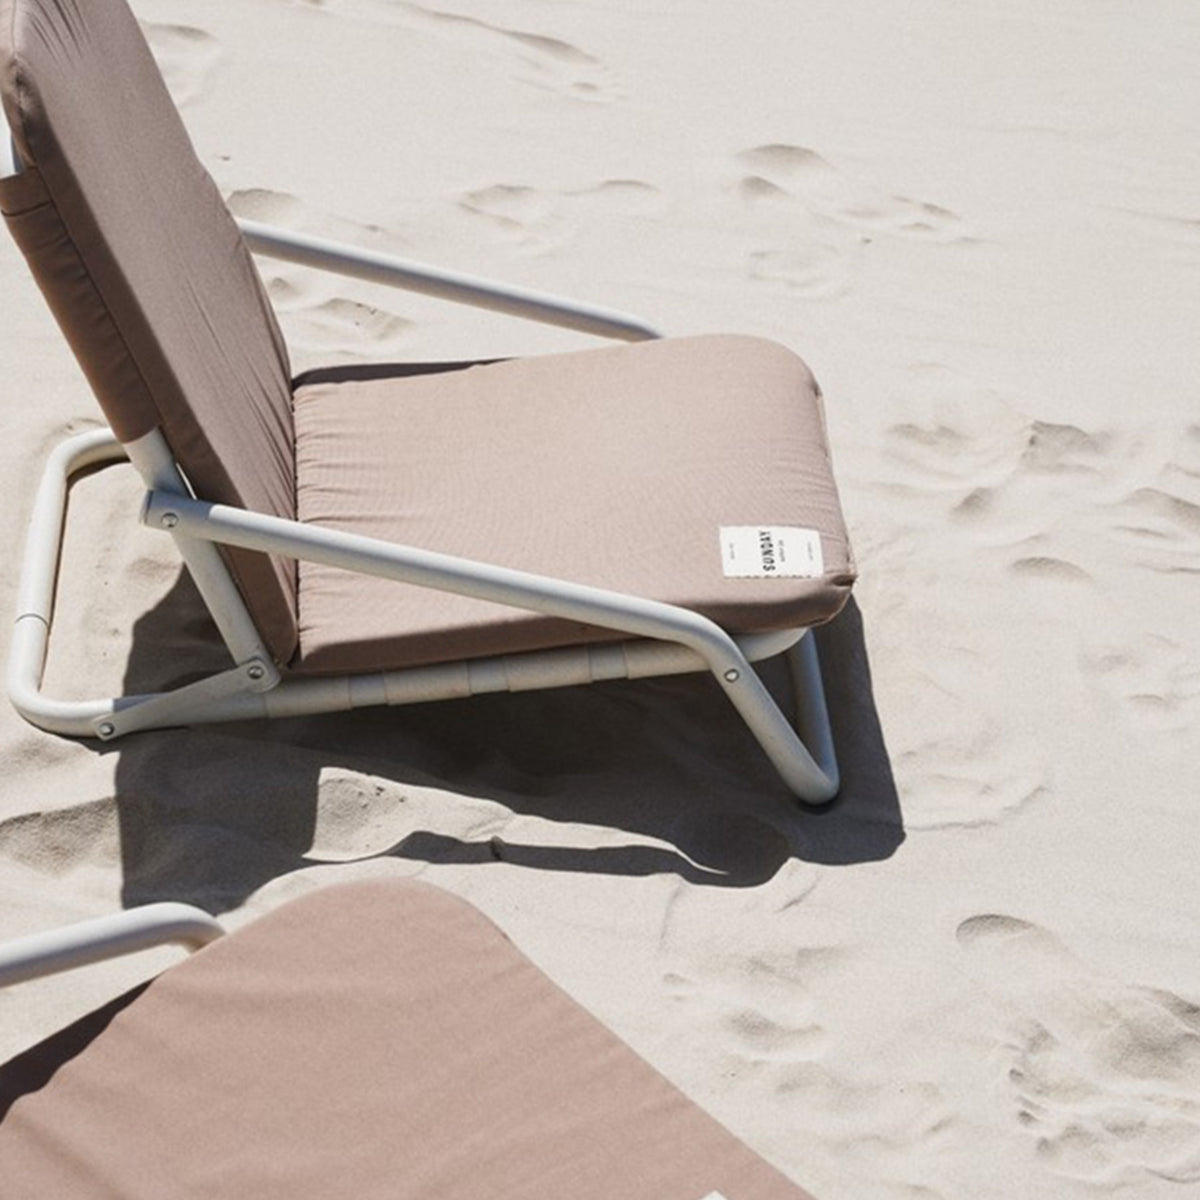 Husk Beach Chair